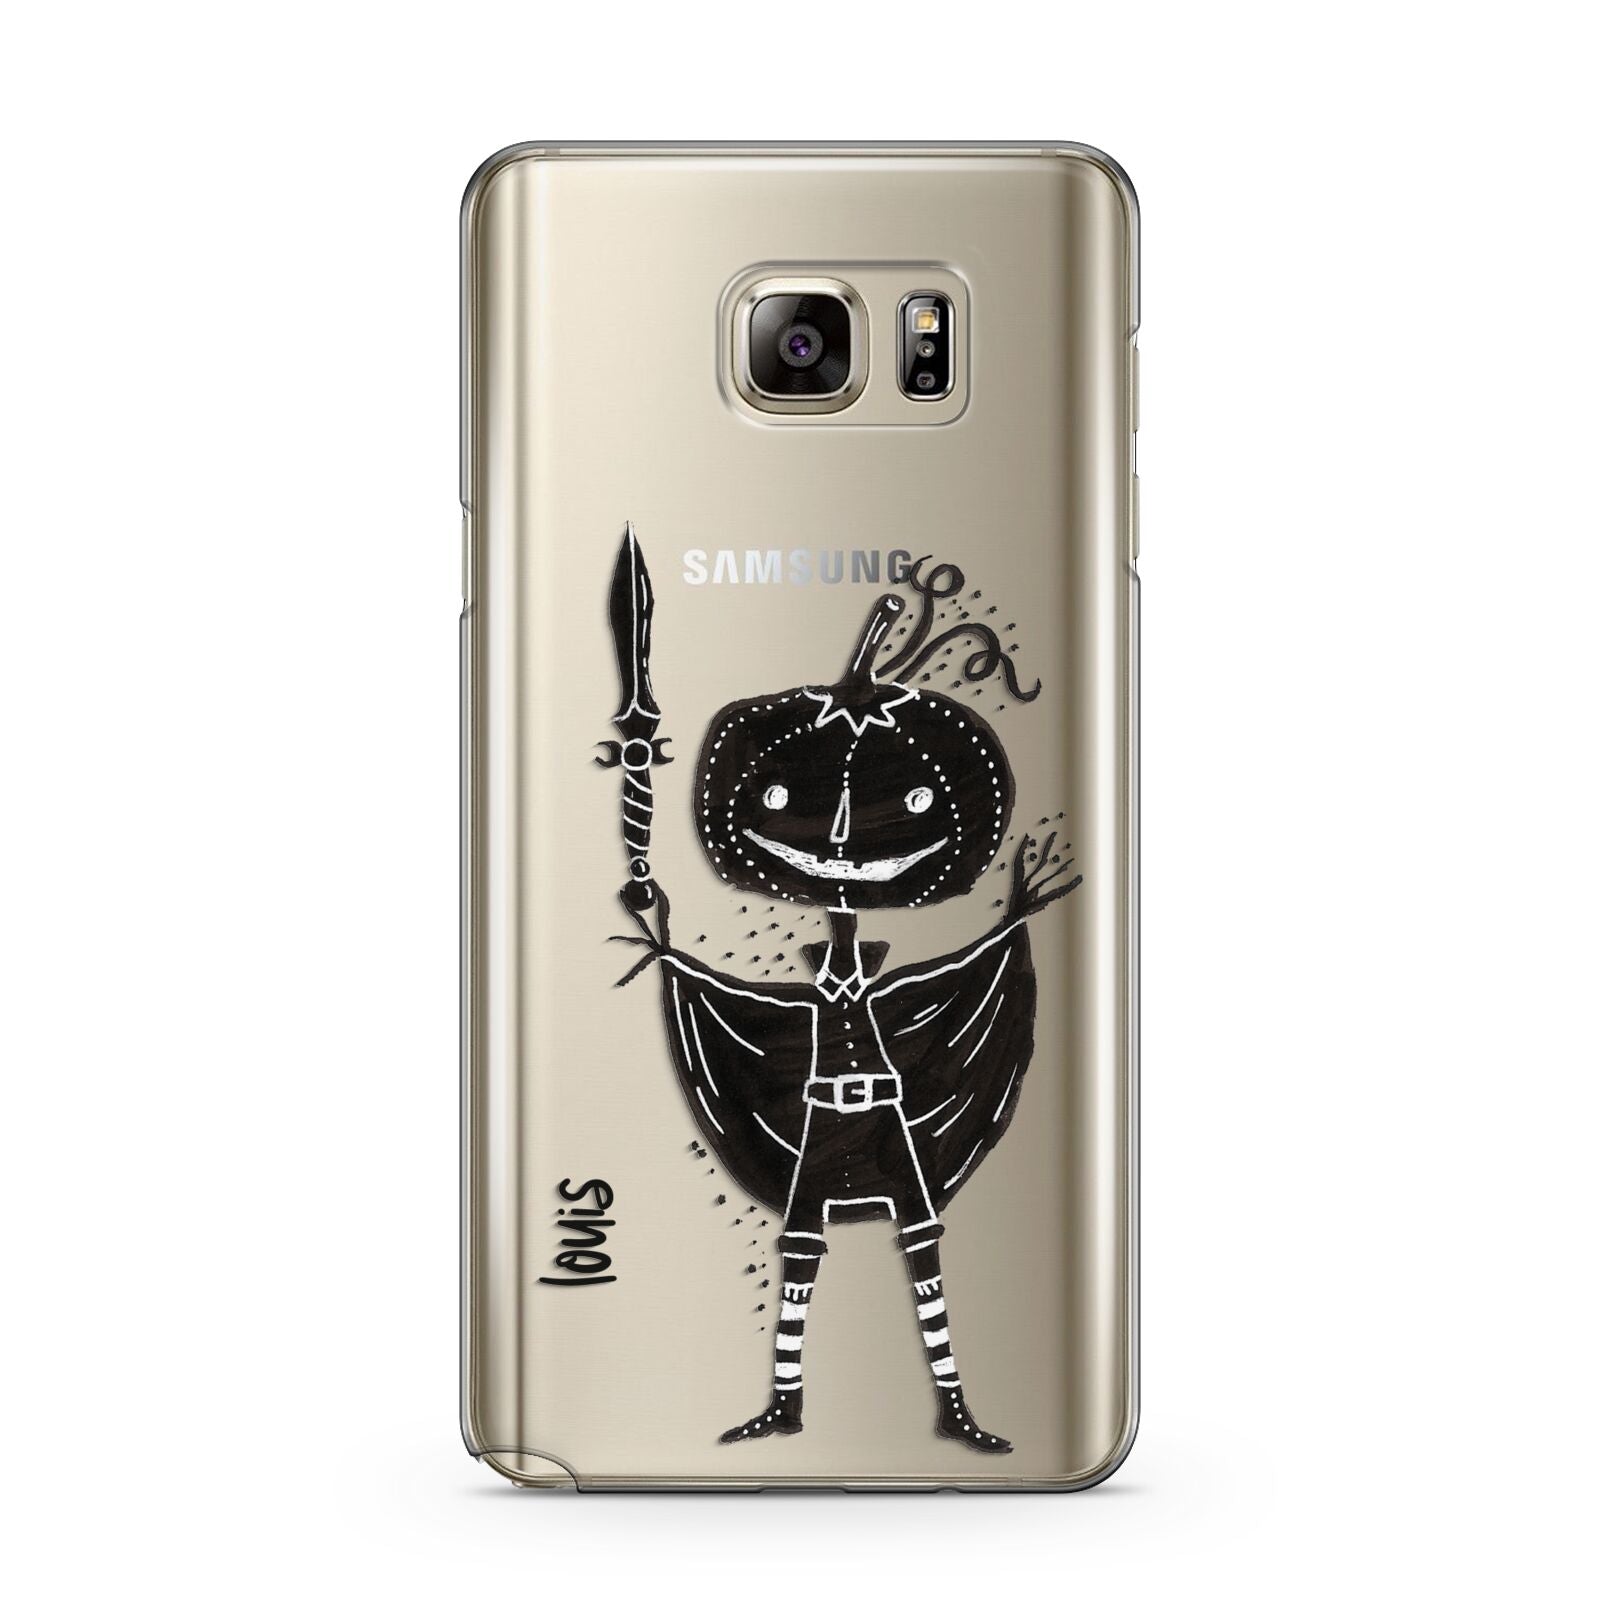 Pumpkin Head Personalised Samsung Galaxy Note 5 Case